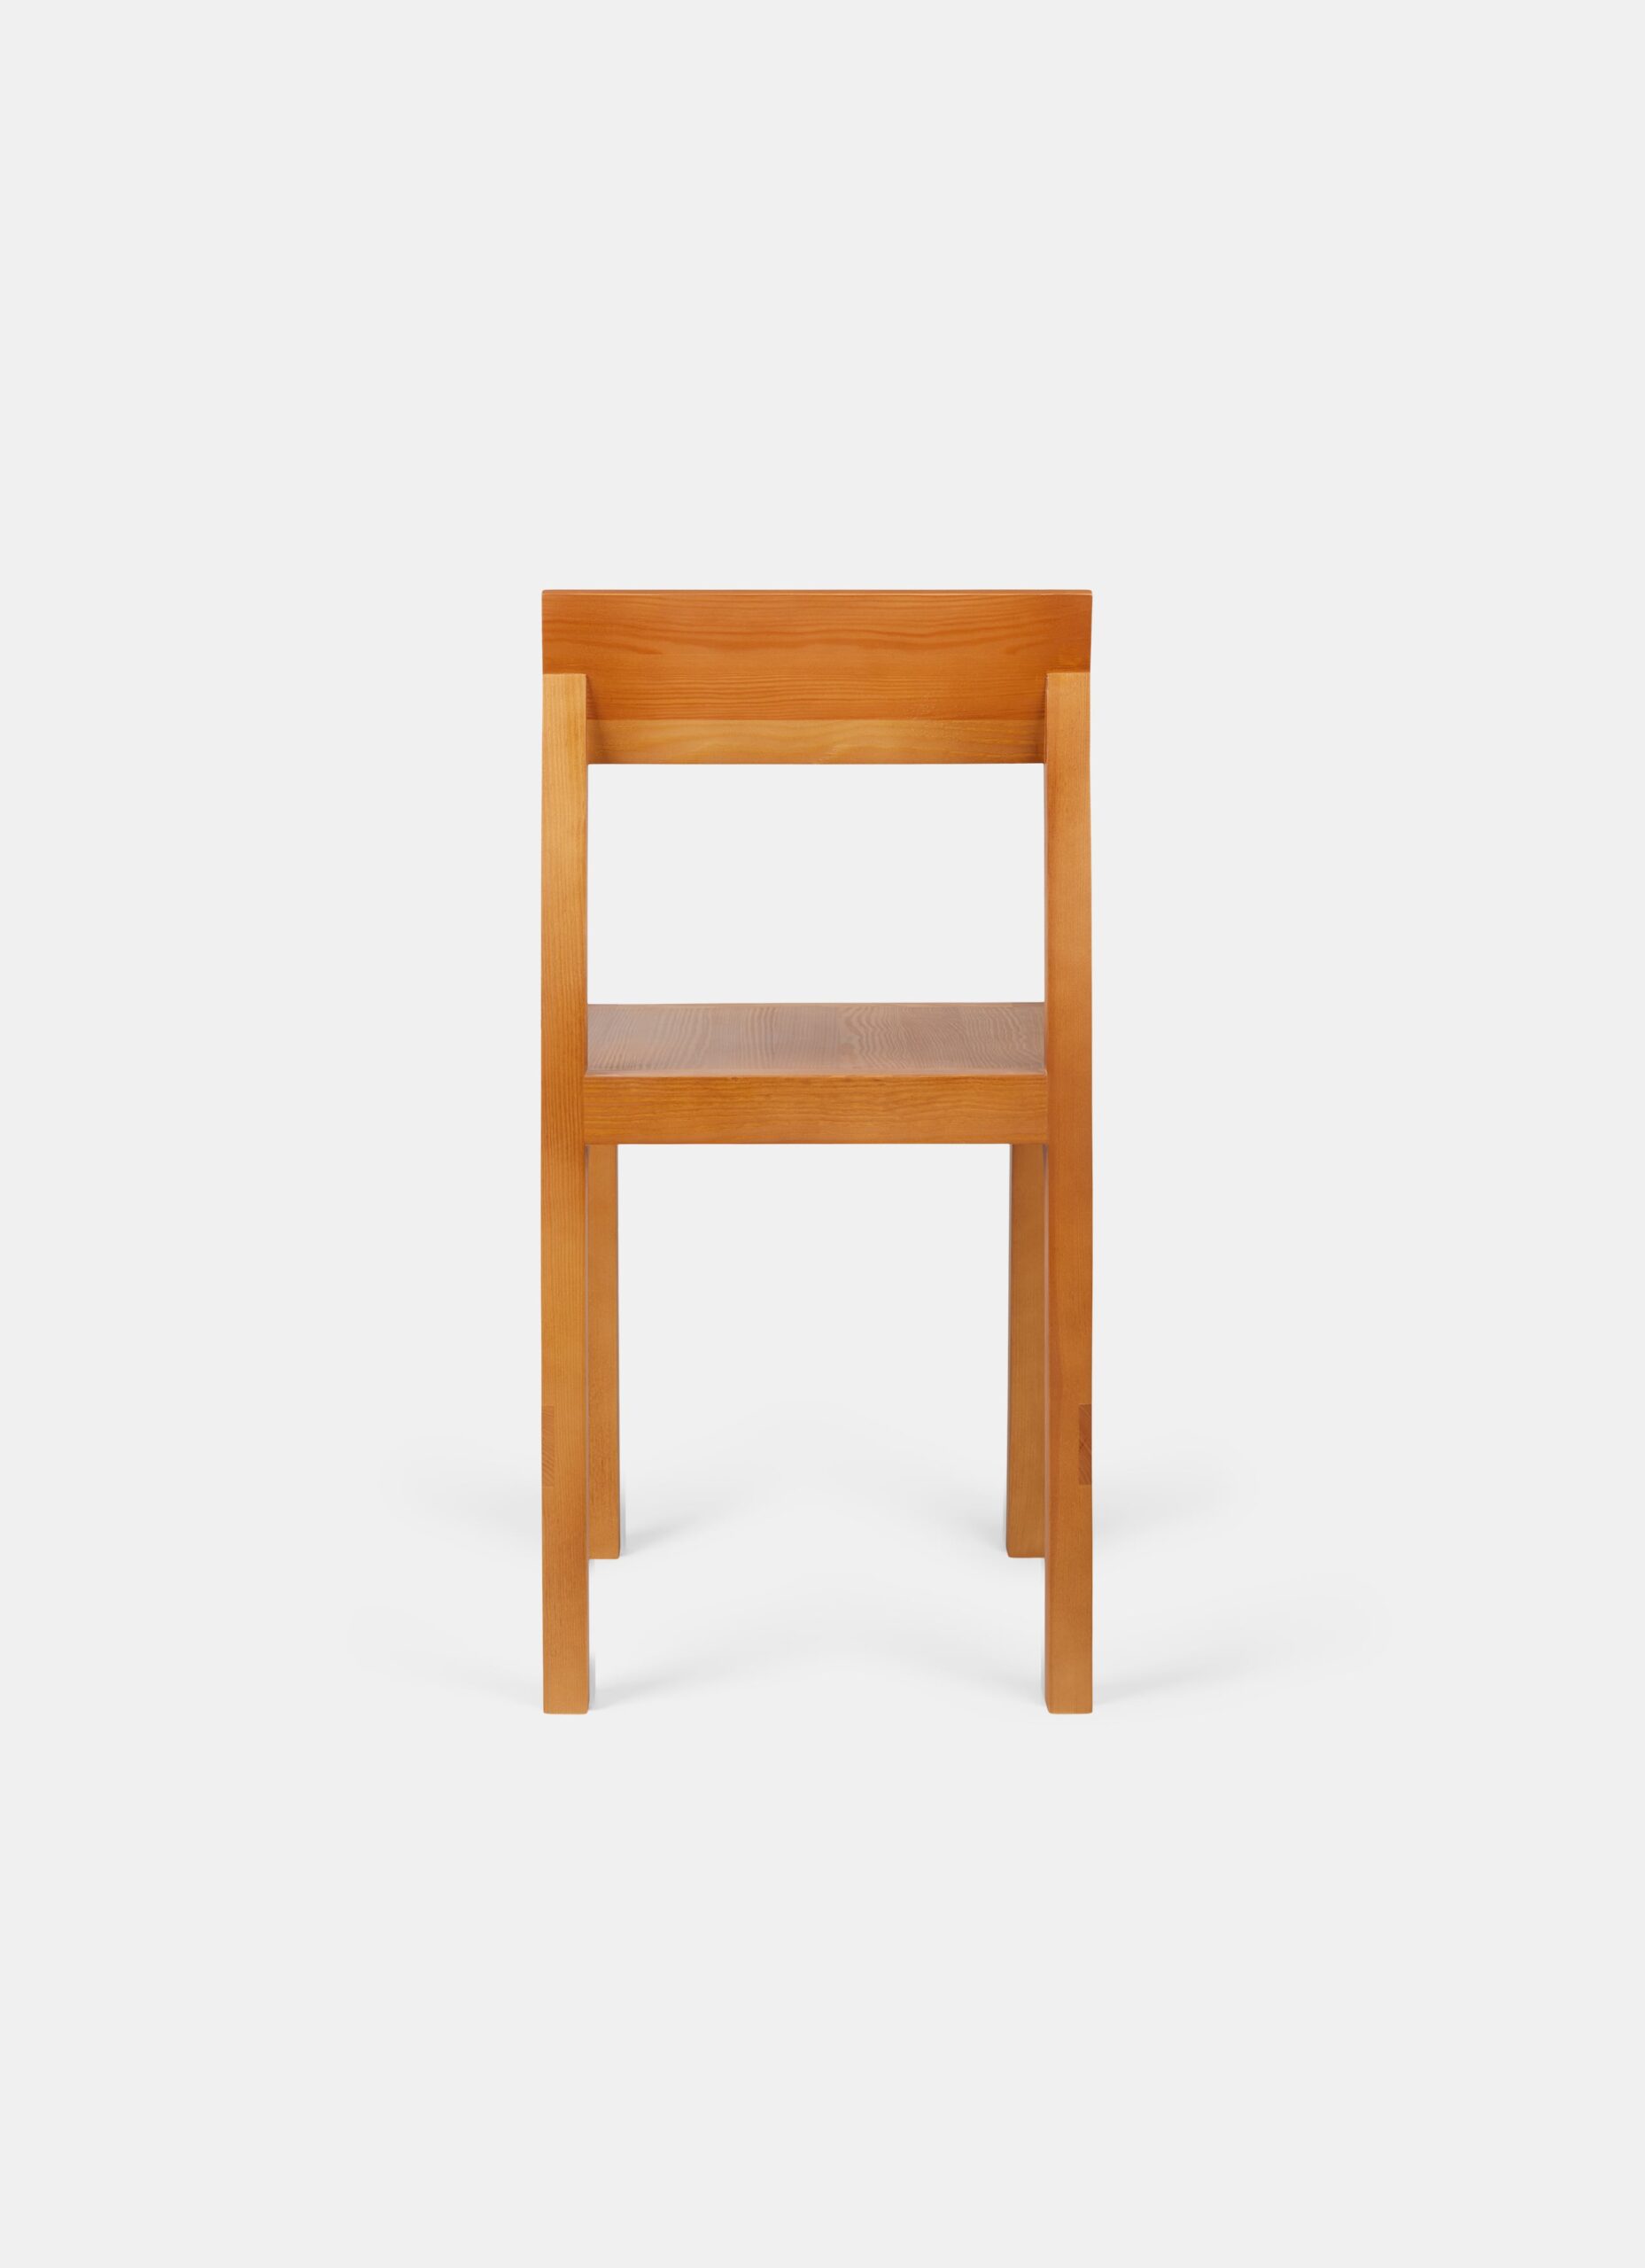 Frama - Bracket Chair - Warm brown pine